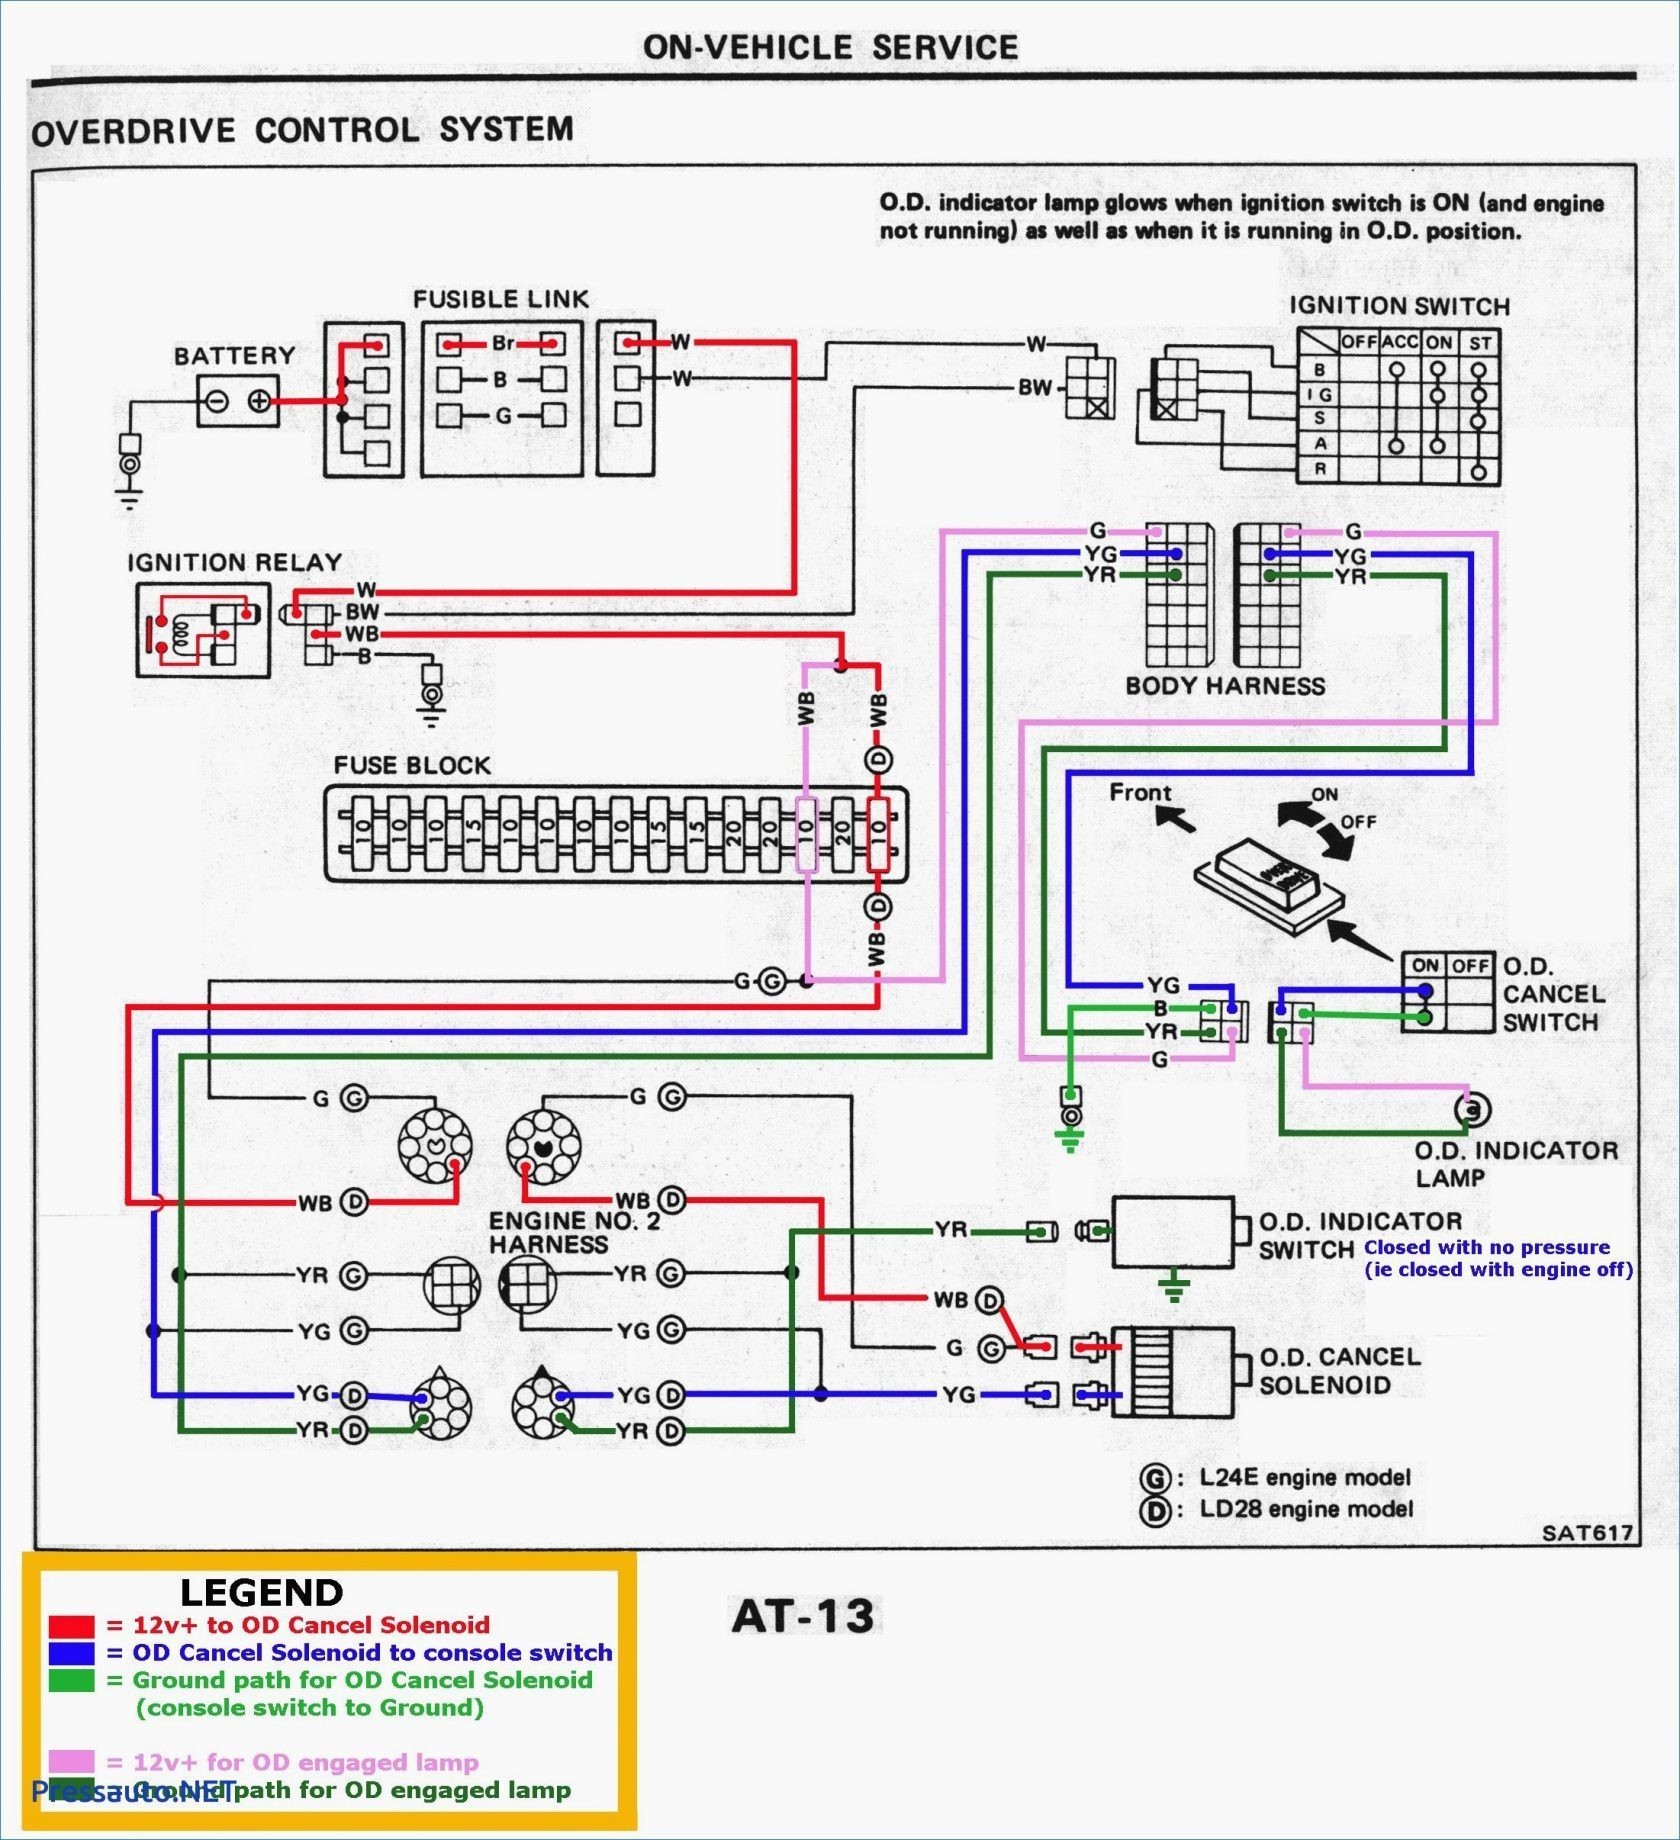 Wiring Diagram for Trailer Lights Trailer Light Wiring Harness Diagram Wiring Diagram toolbox Of Wiring Diagram for Trailer Lights